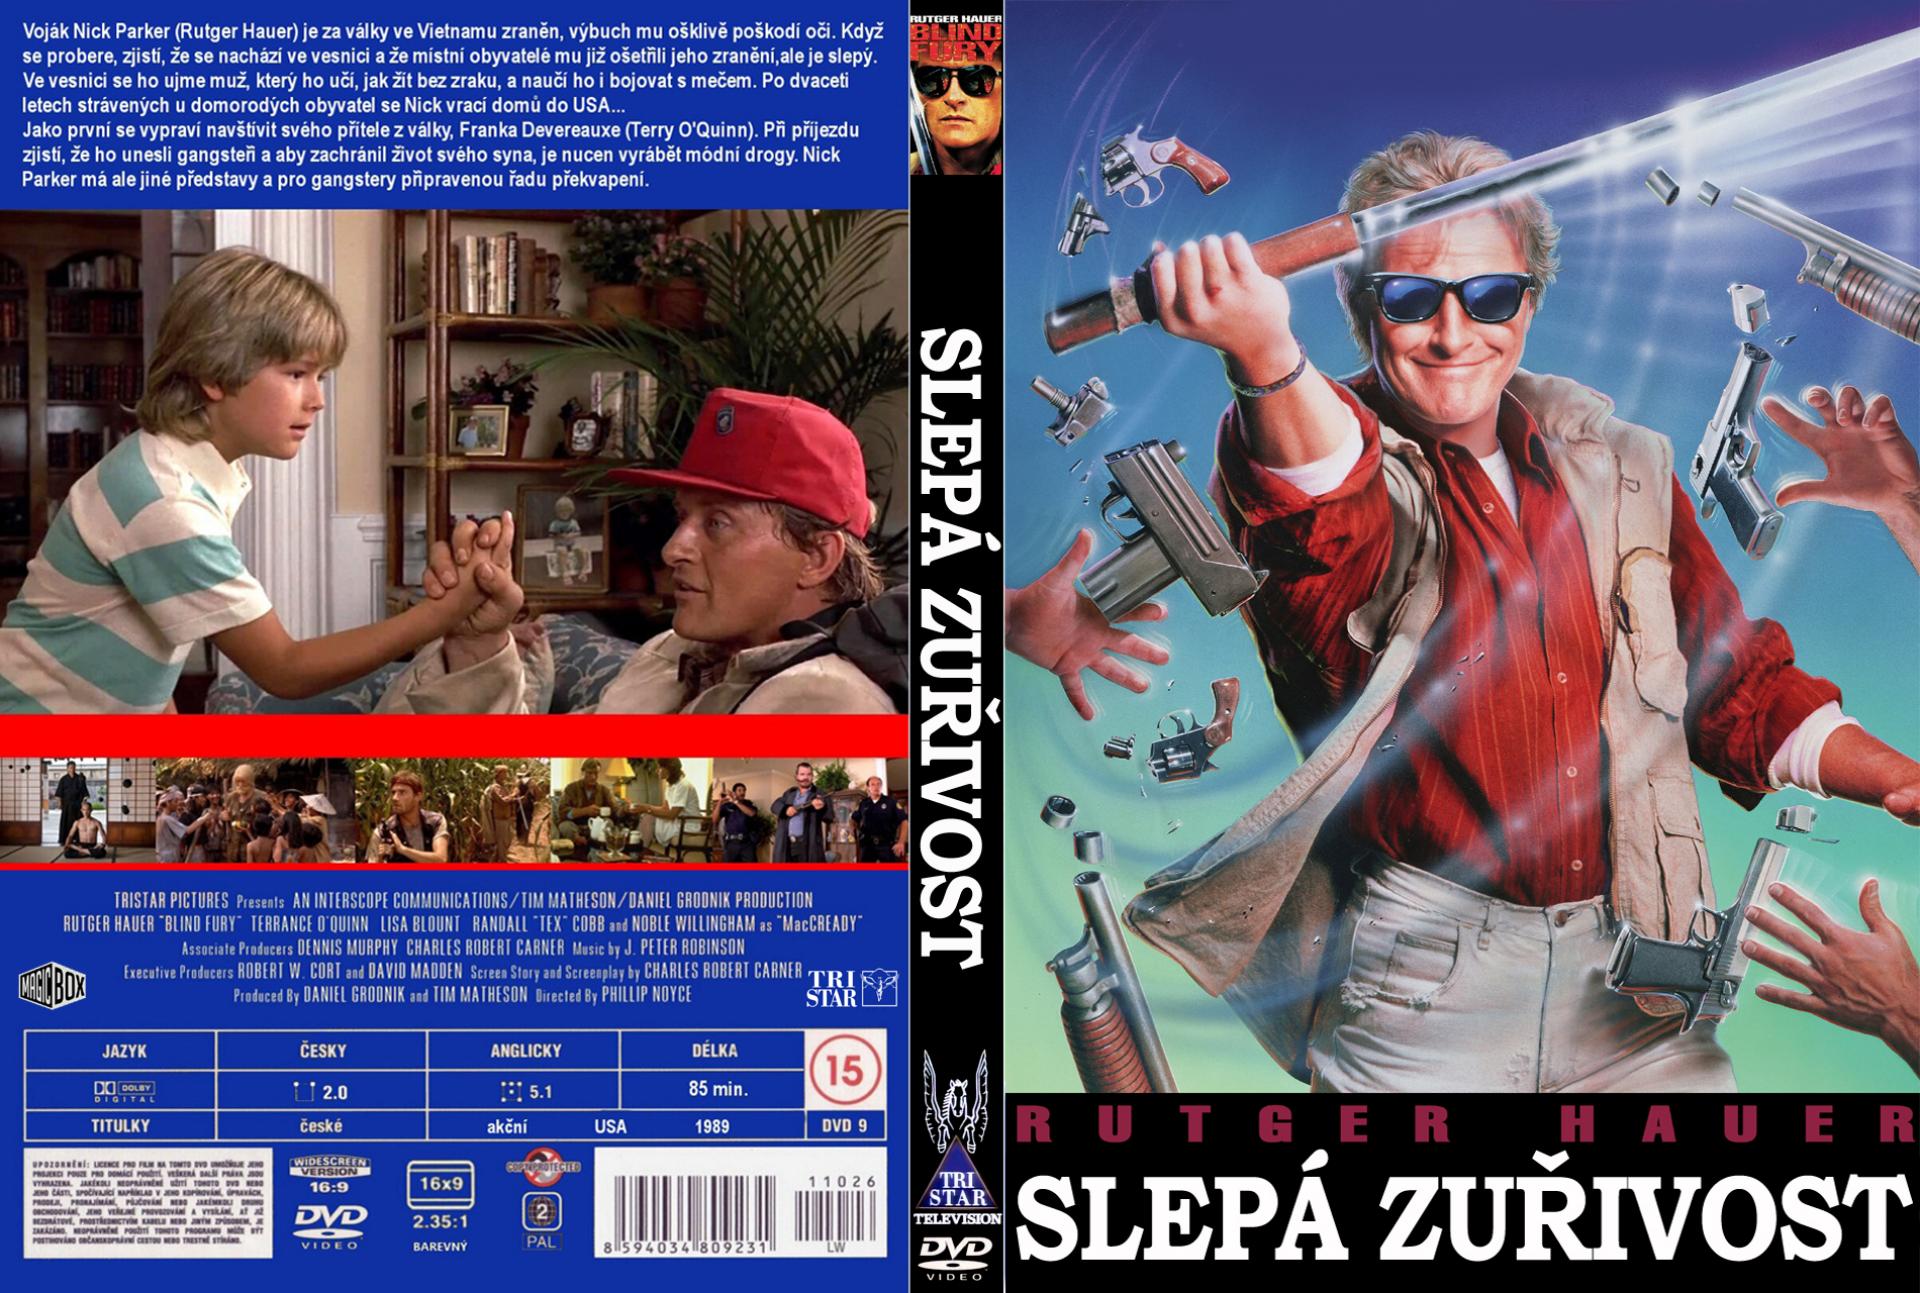 Stiahni si Filmy CZ/SK dabing     Slepa zurivost / Blind Fury (1989)(CZ) = CSFD 64%